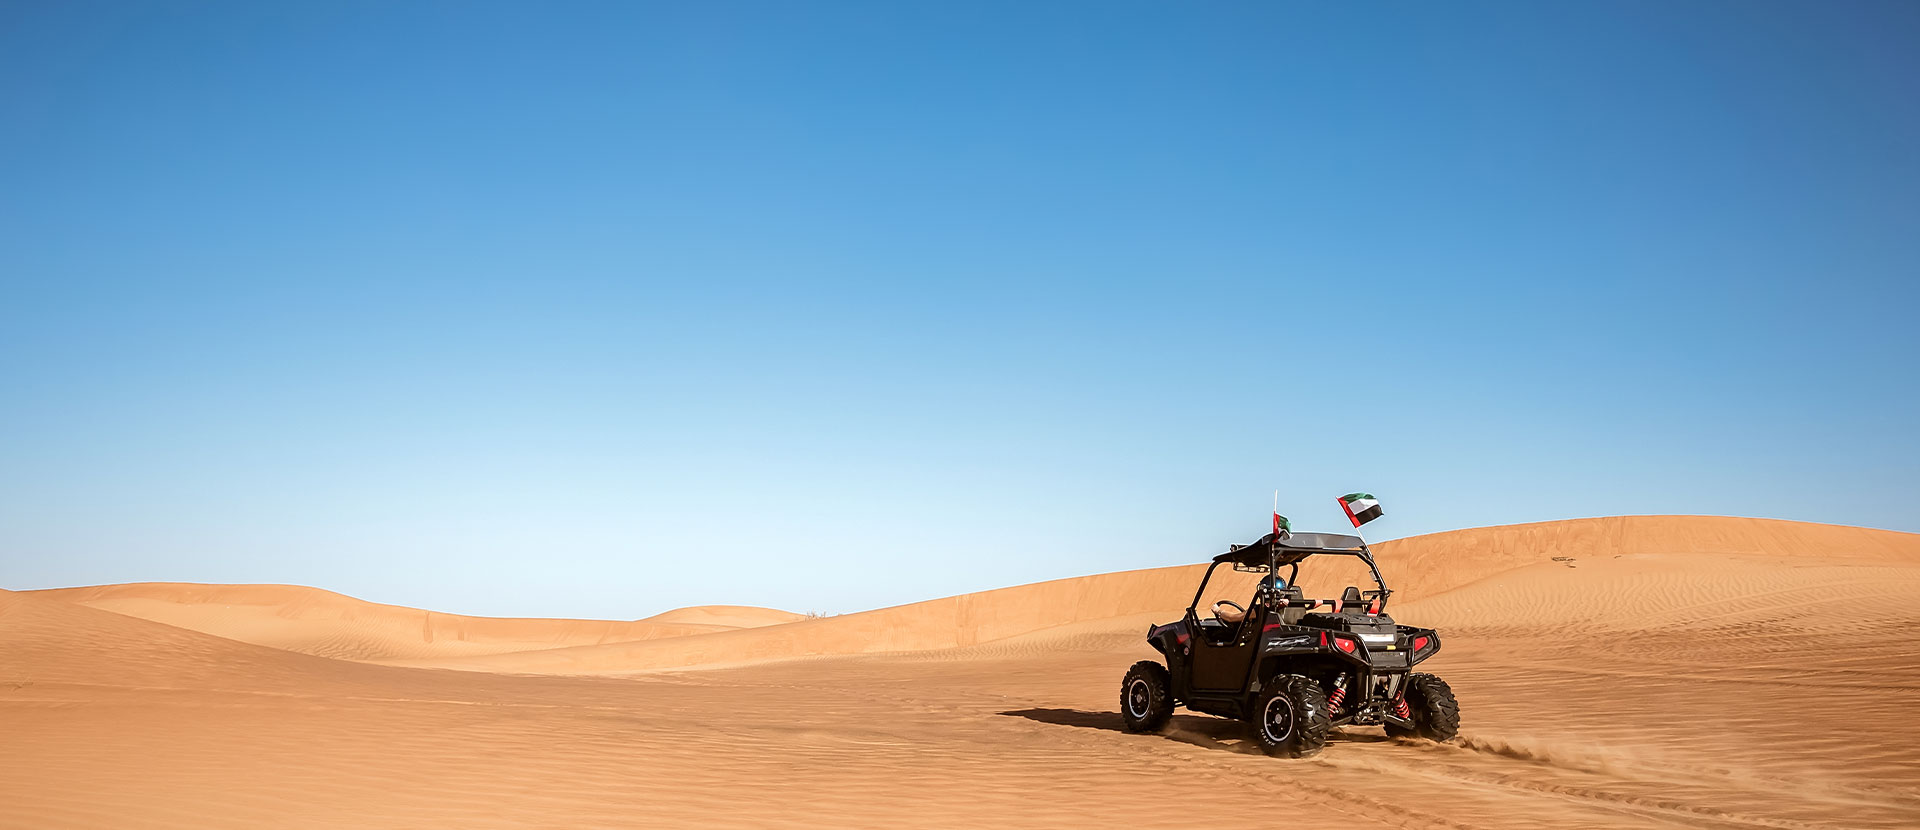 Desert Safari Abu Dhabi | Great Deals and Packages